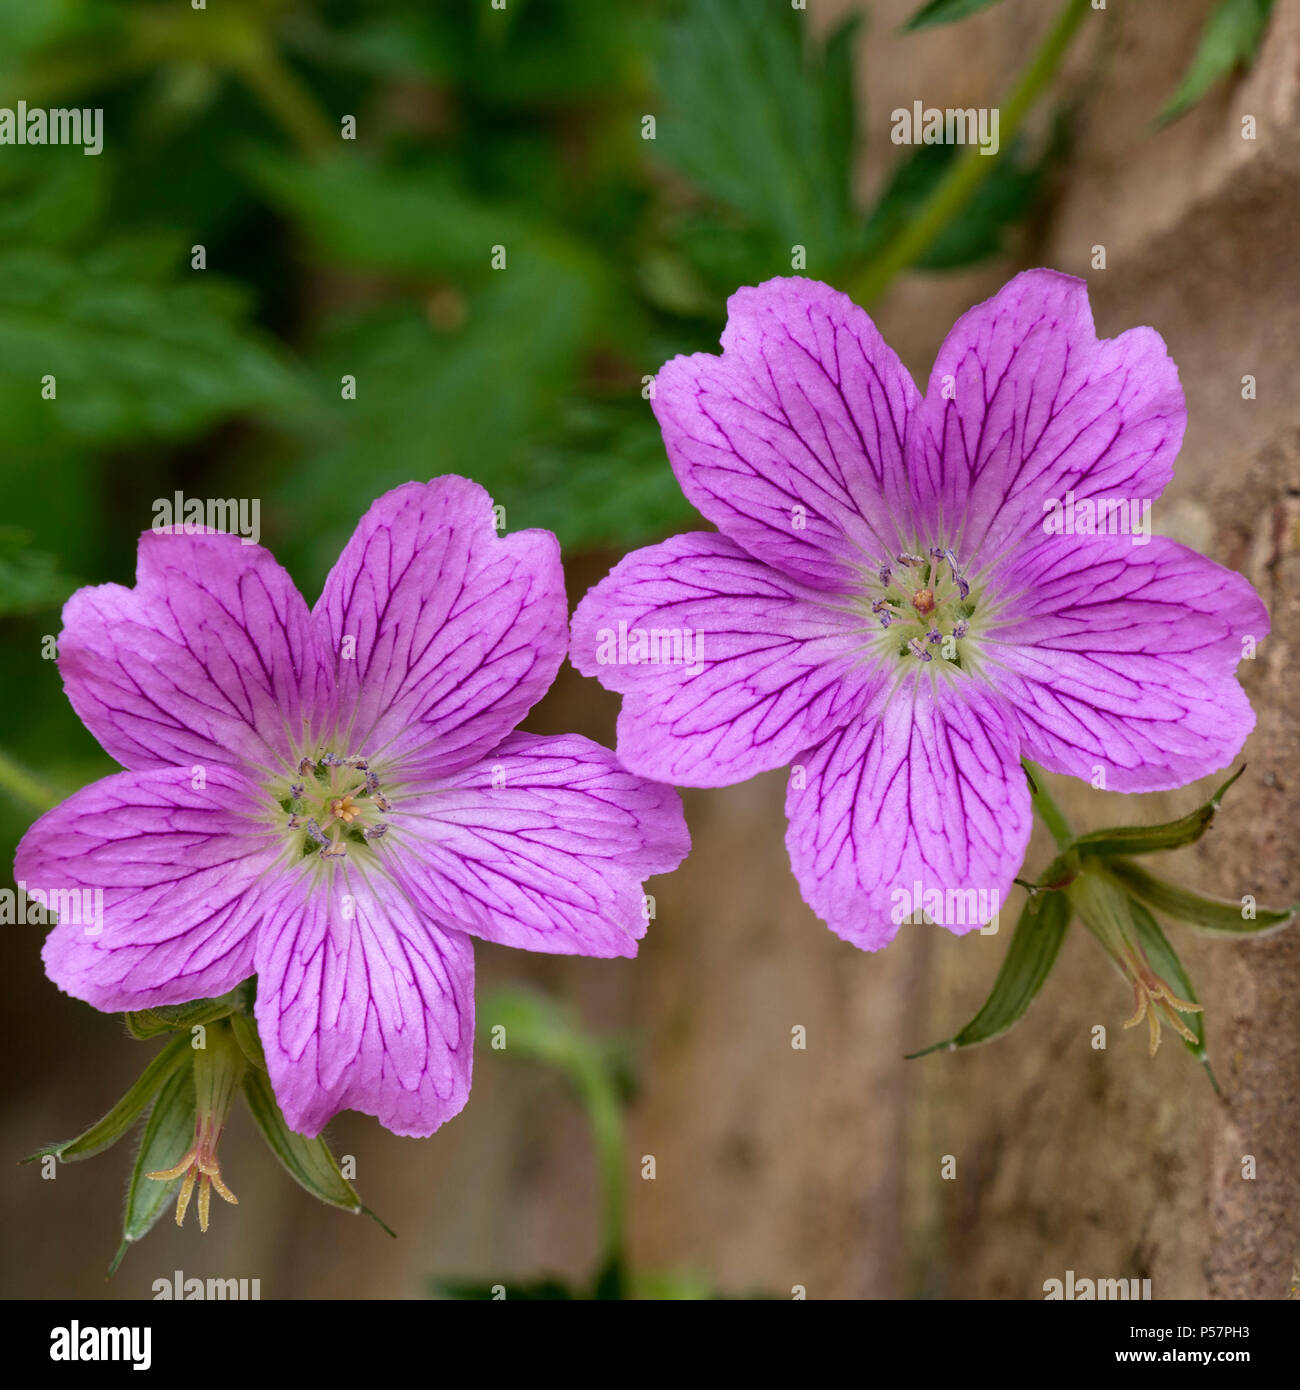 Two Geranium magnificum purple cranesbill flowers closeup Stock Photo